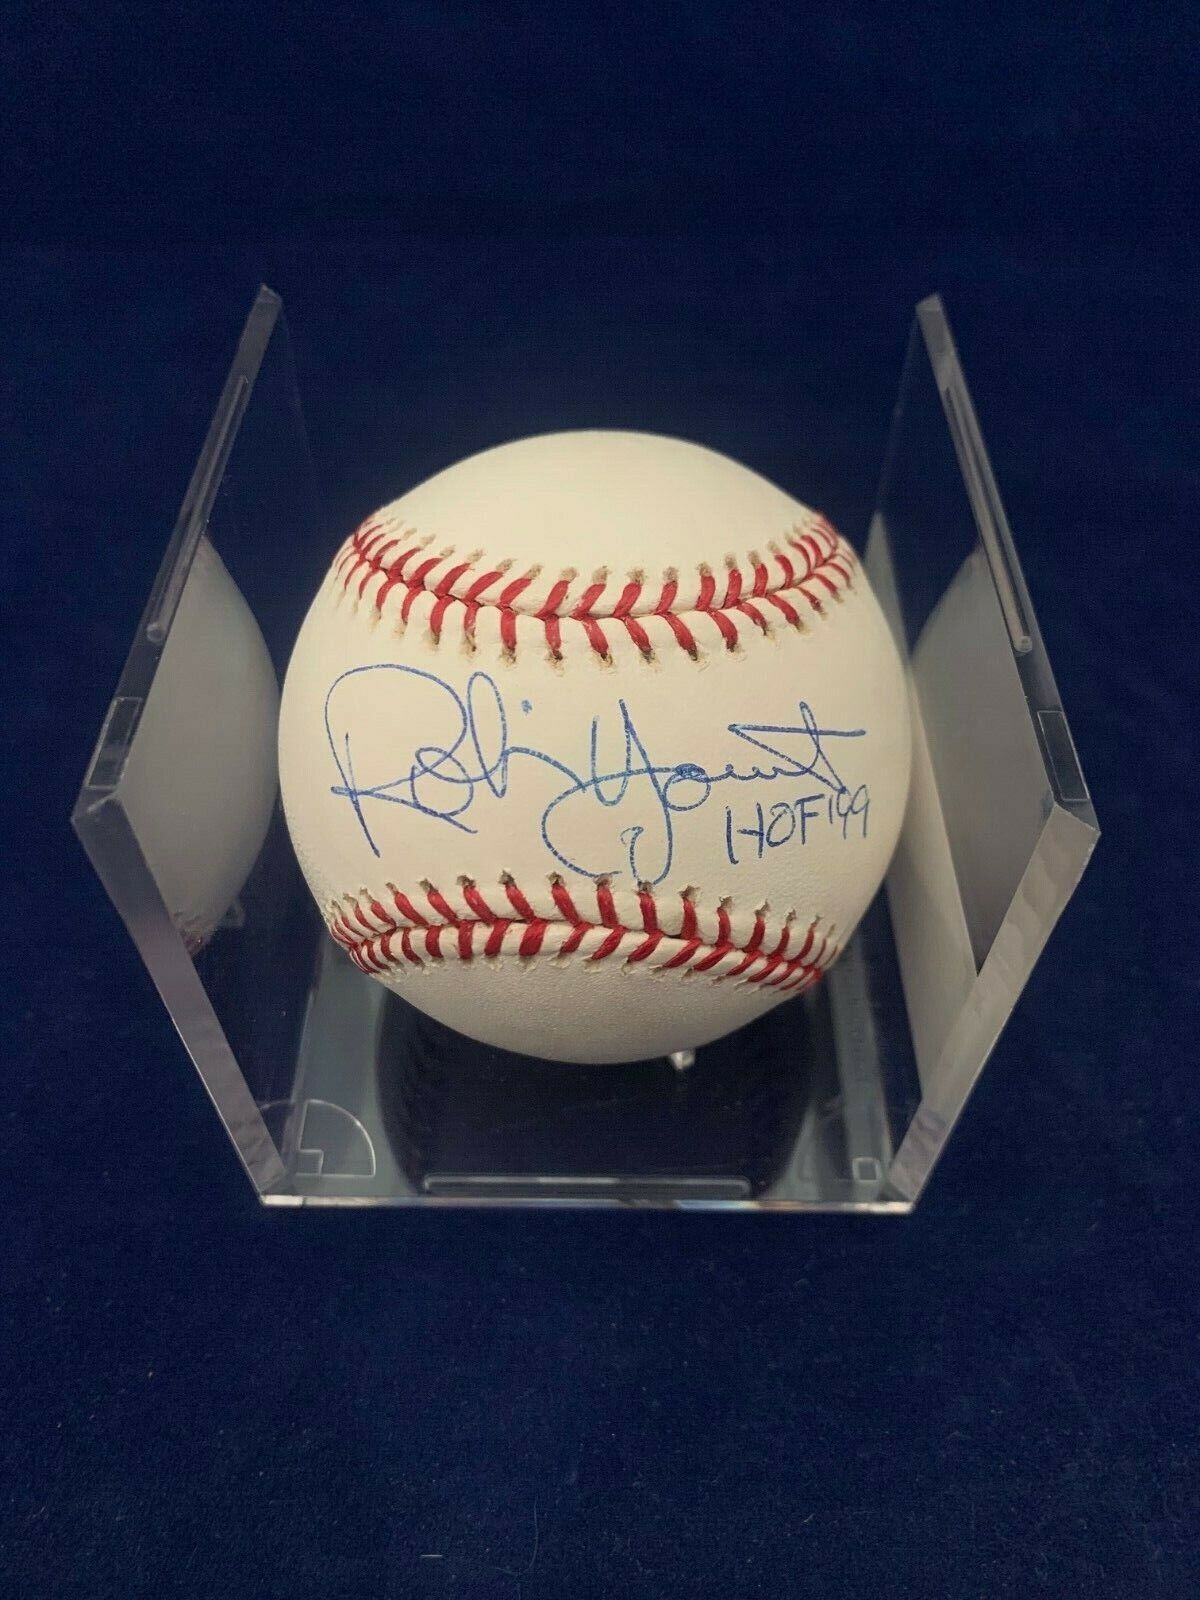 Robin Yount Signed Rawlings Baseball HoF99 Inscription with JSA COA